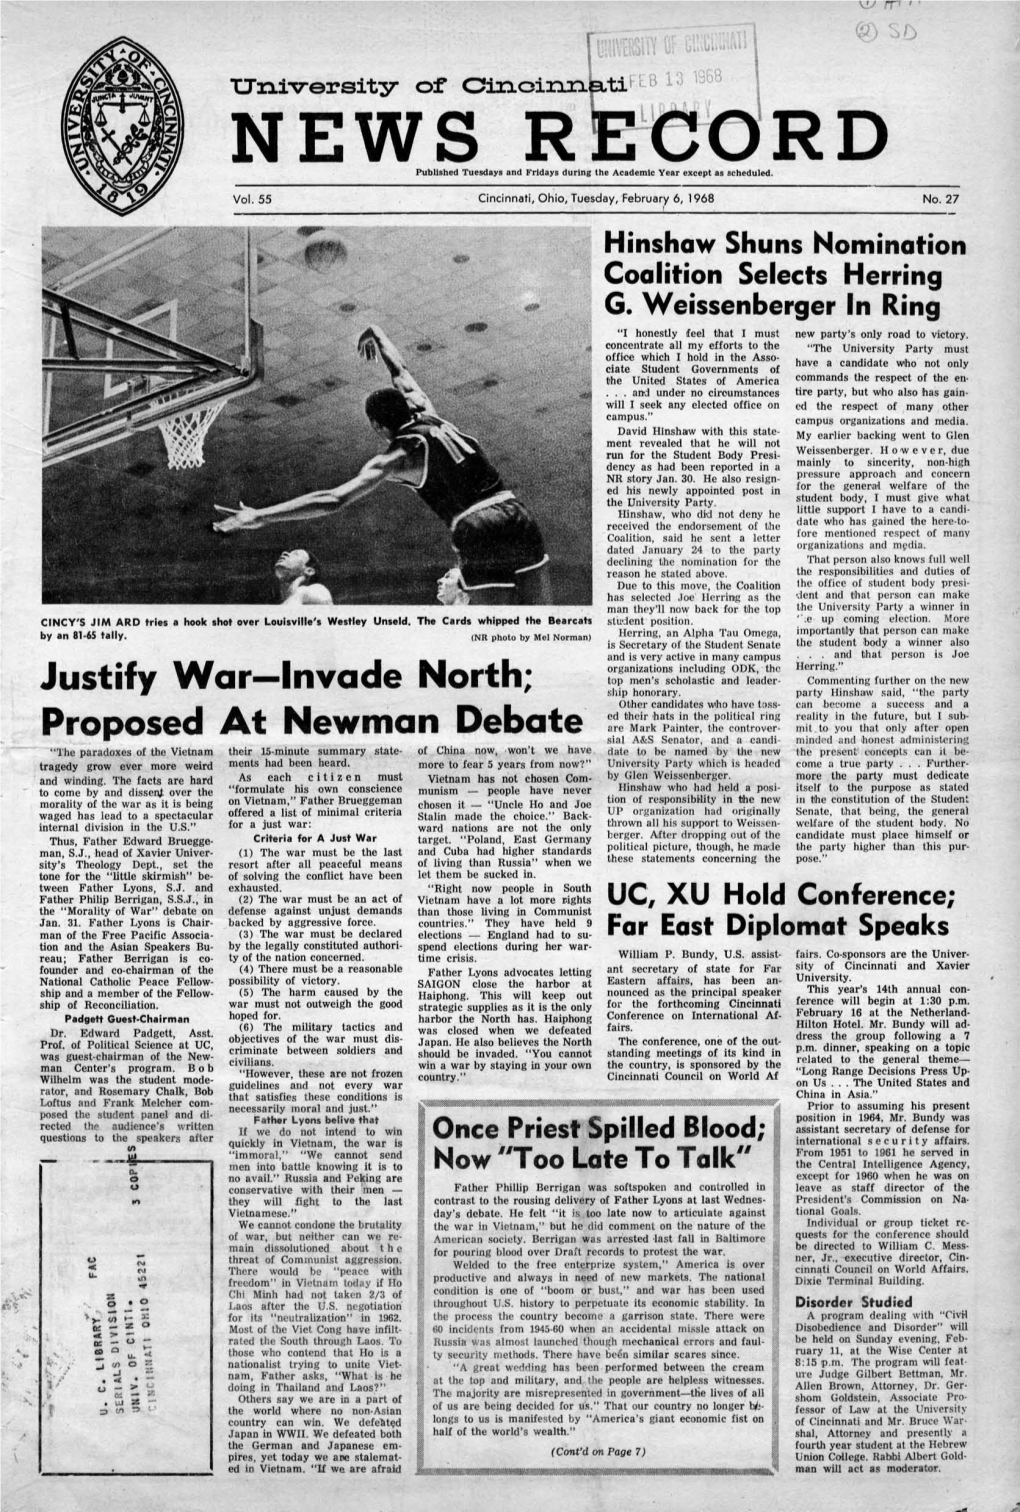 University of Cincinnati News Record. Tuesday, February 6, 1968. Vol. LV